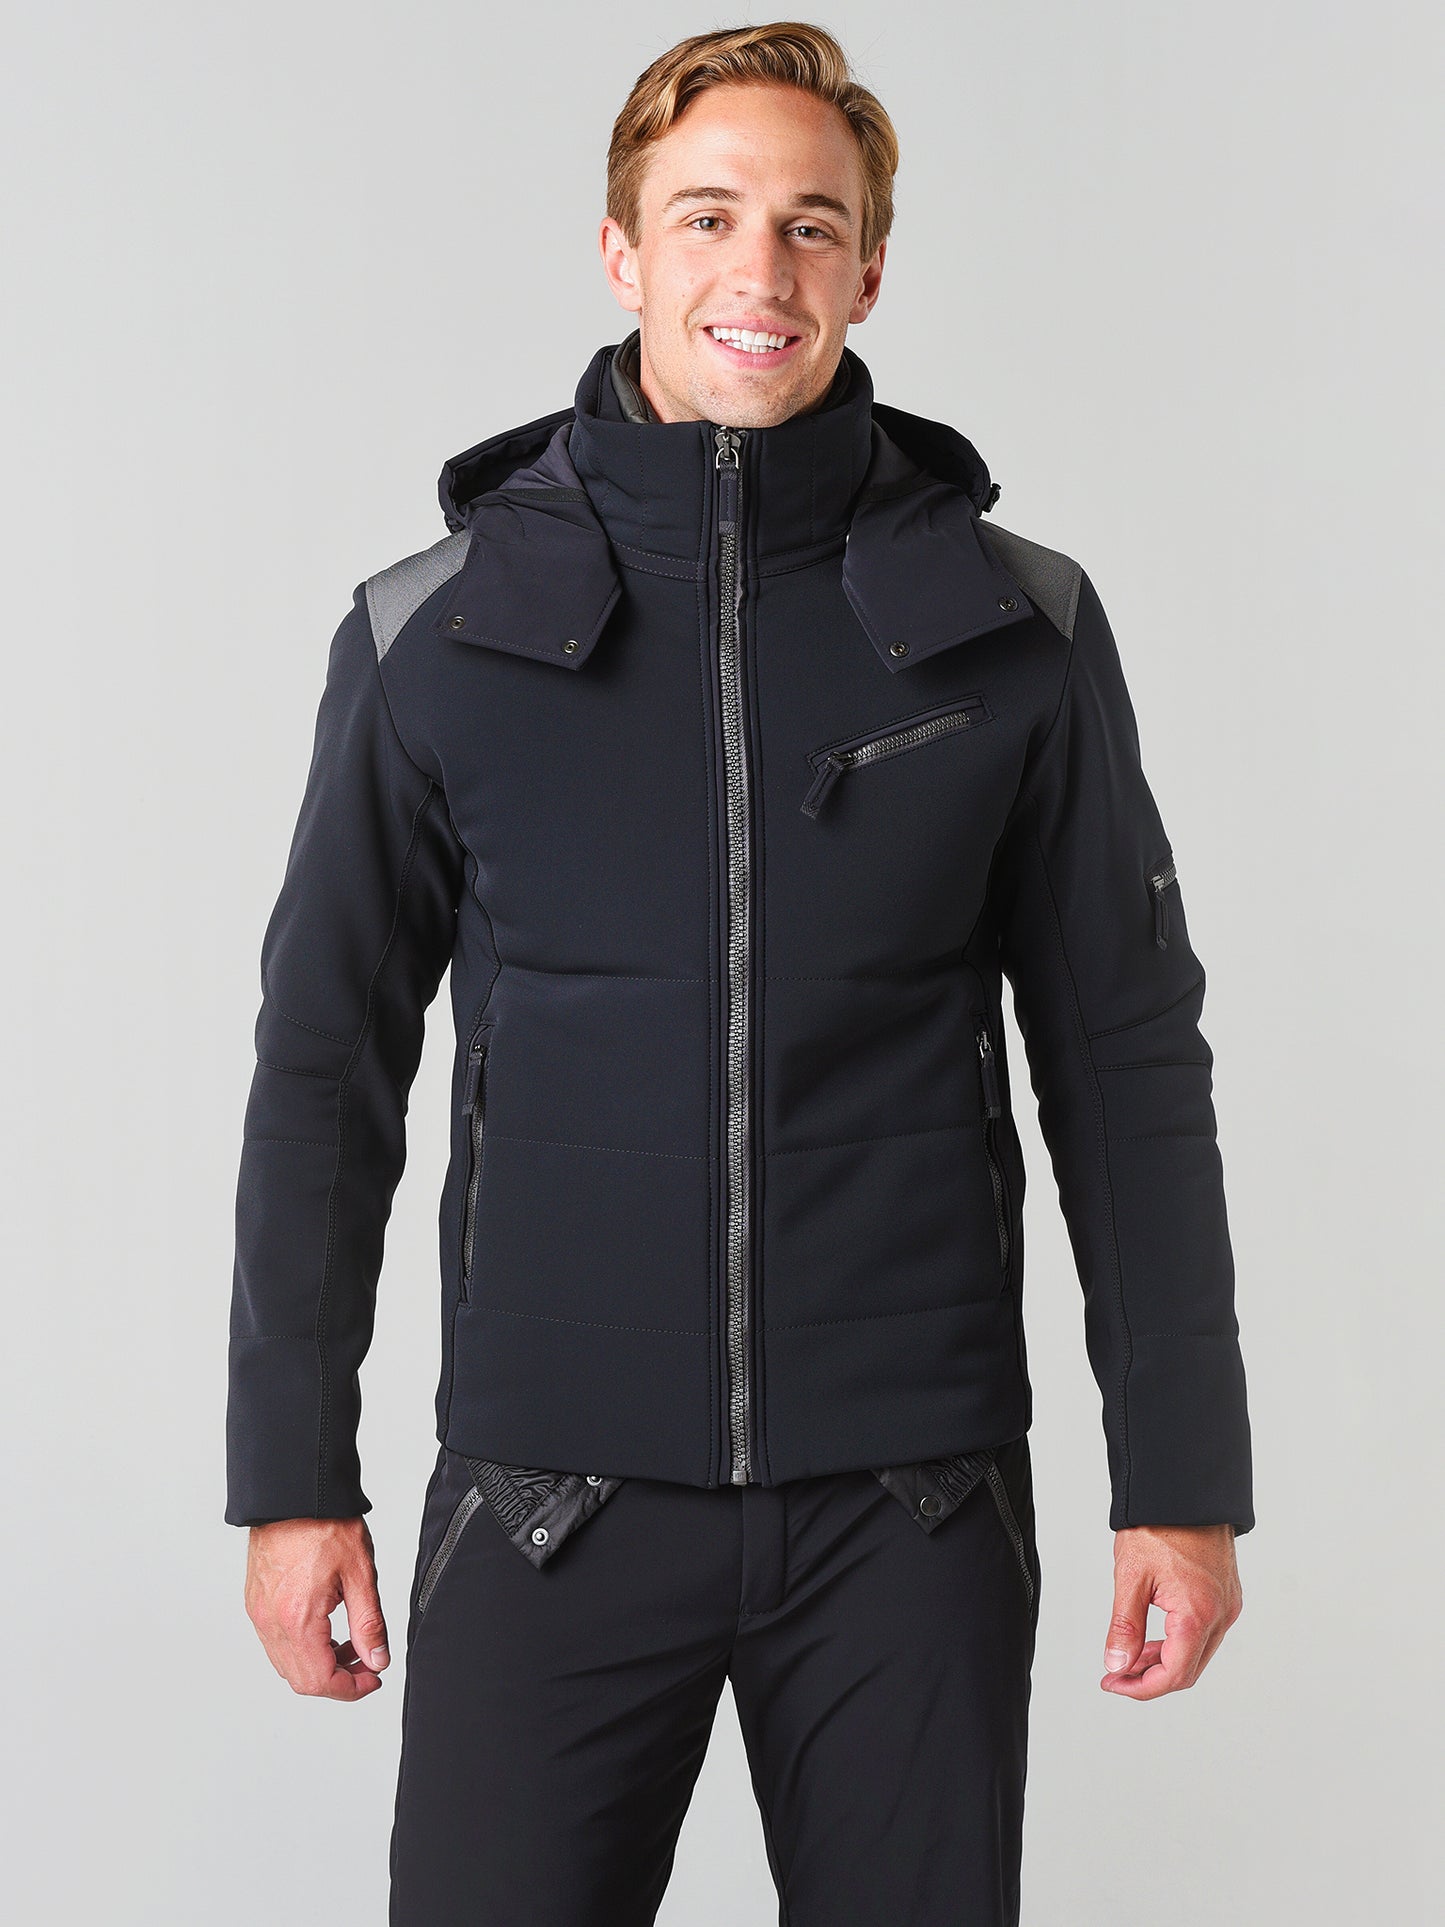 Frauenschuh Men's Mattay Ski Jacket